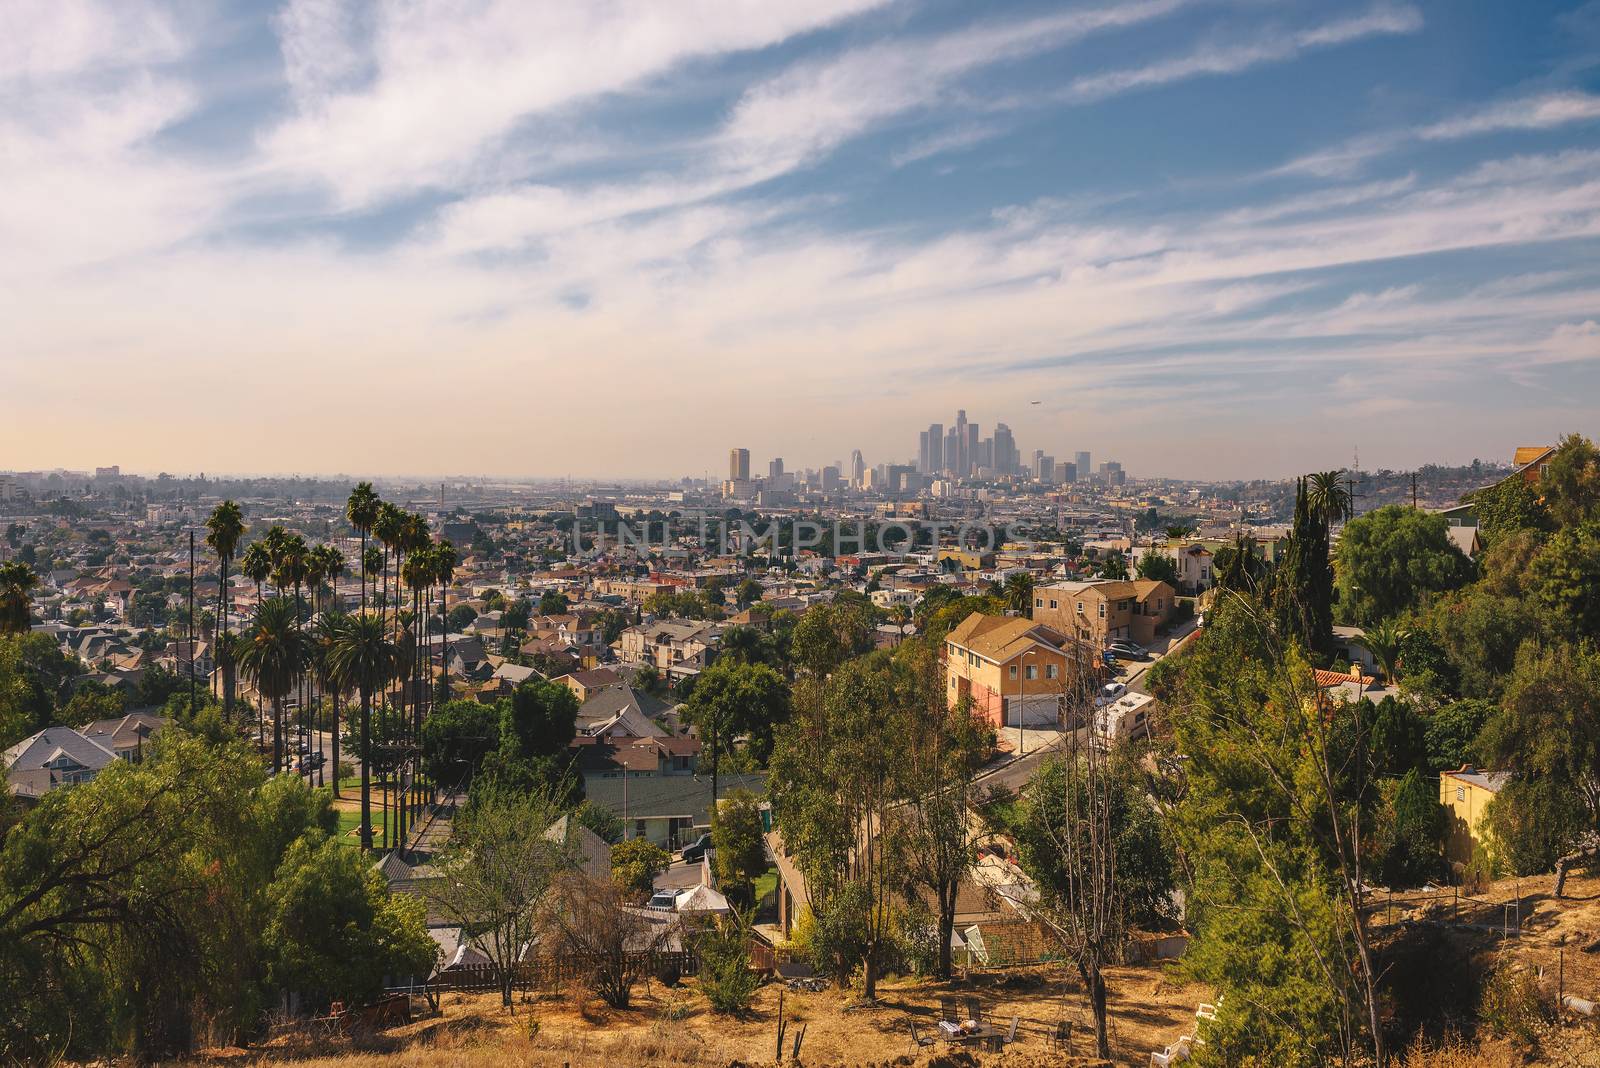 City skyline of Los Angeles in California by nickfox